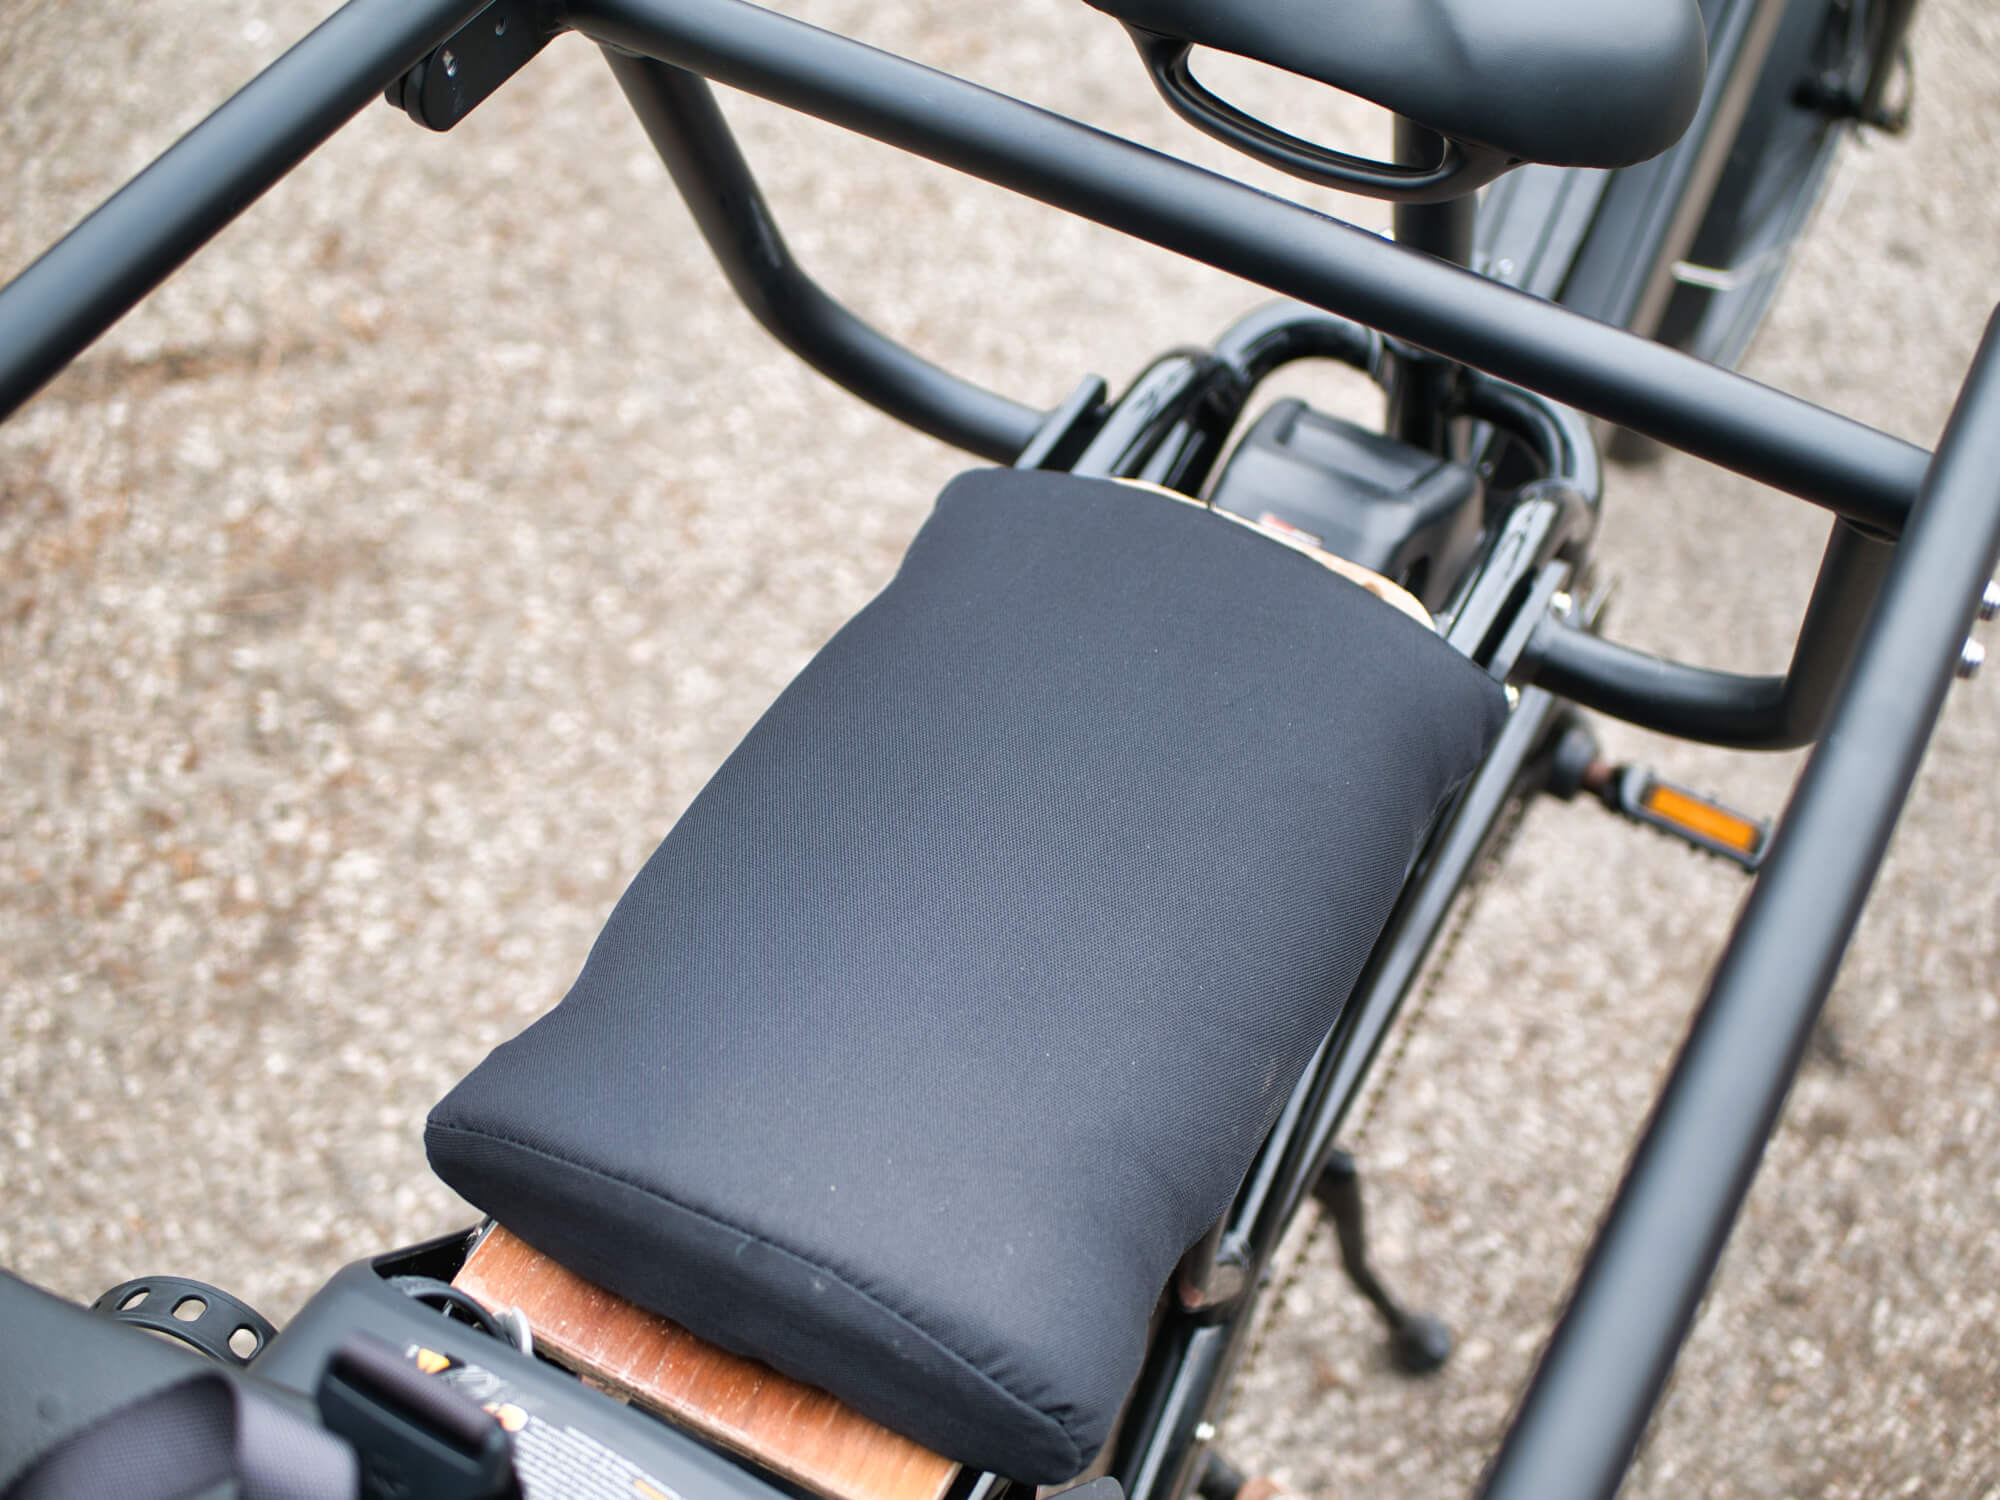 Mycle family cargo bike - accessories